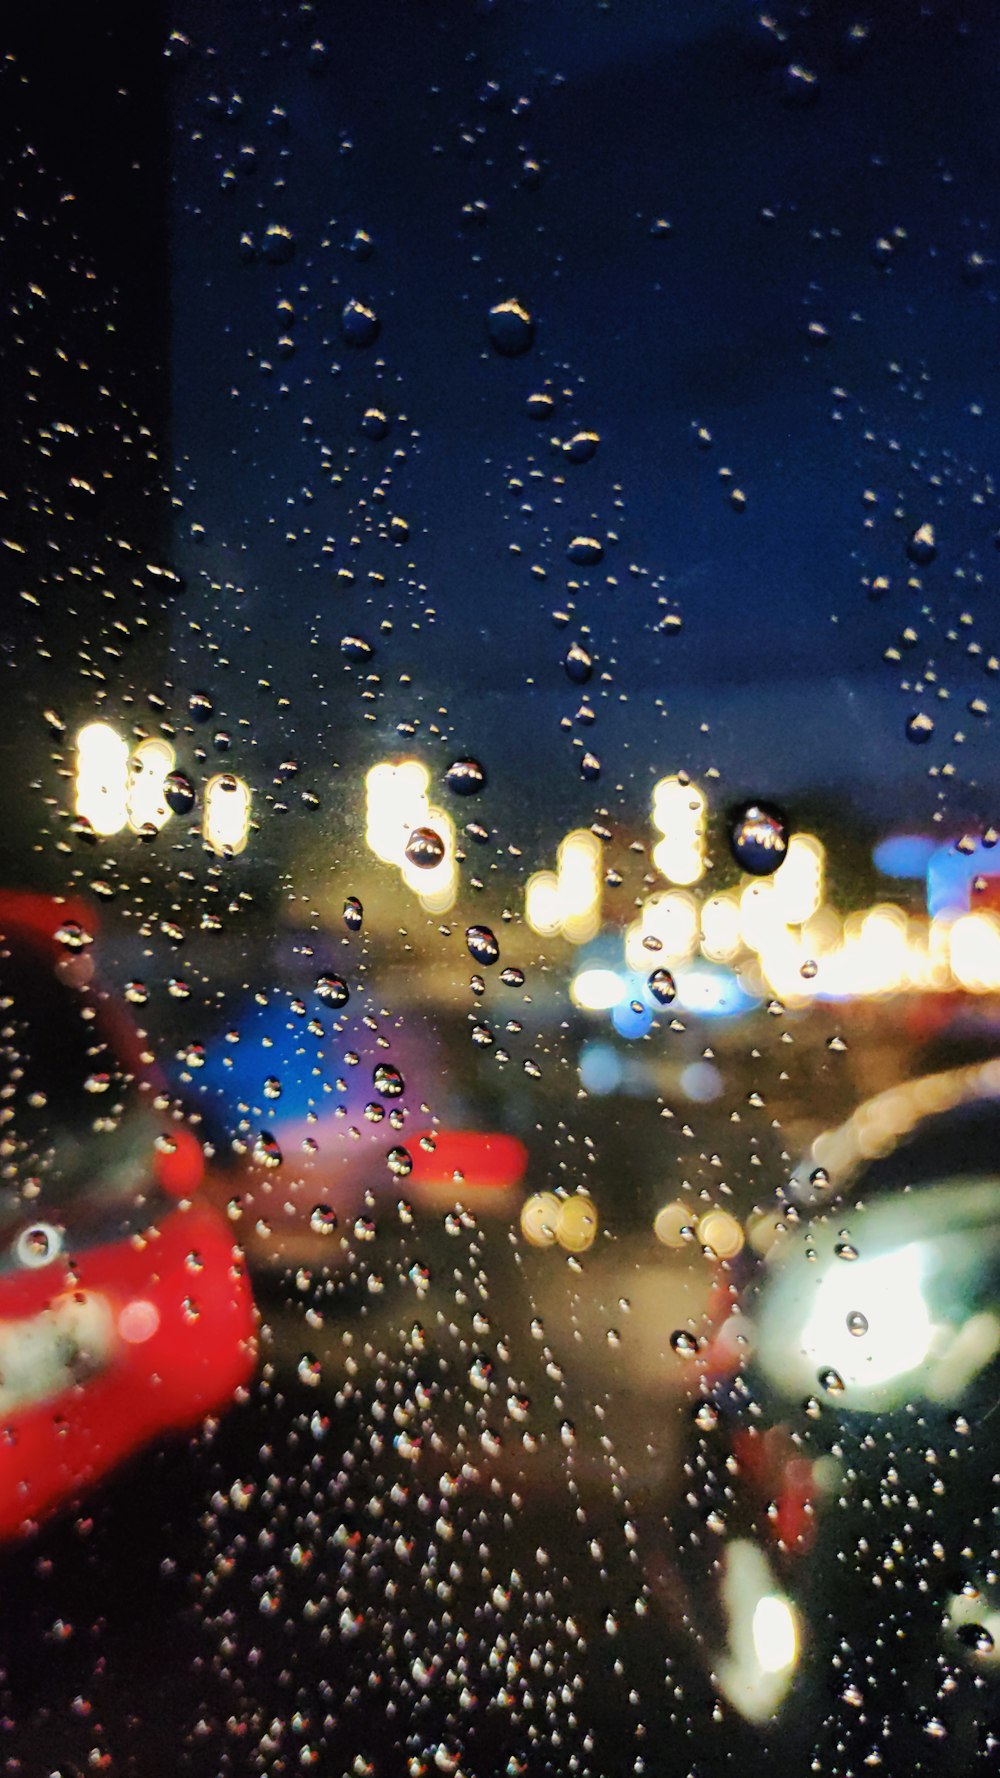 rain drops on a window as cars drive down the street